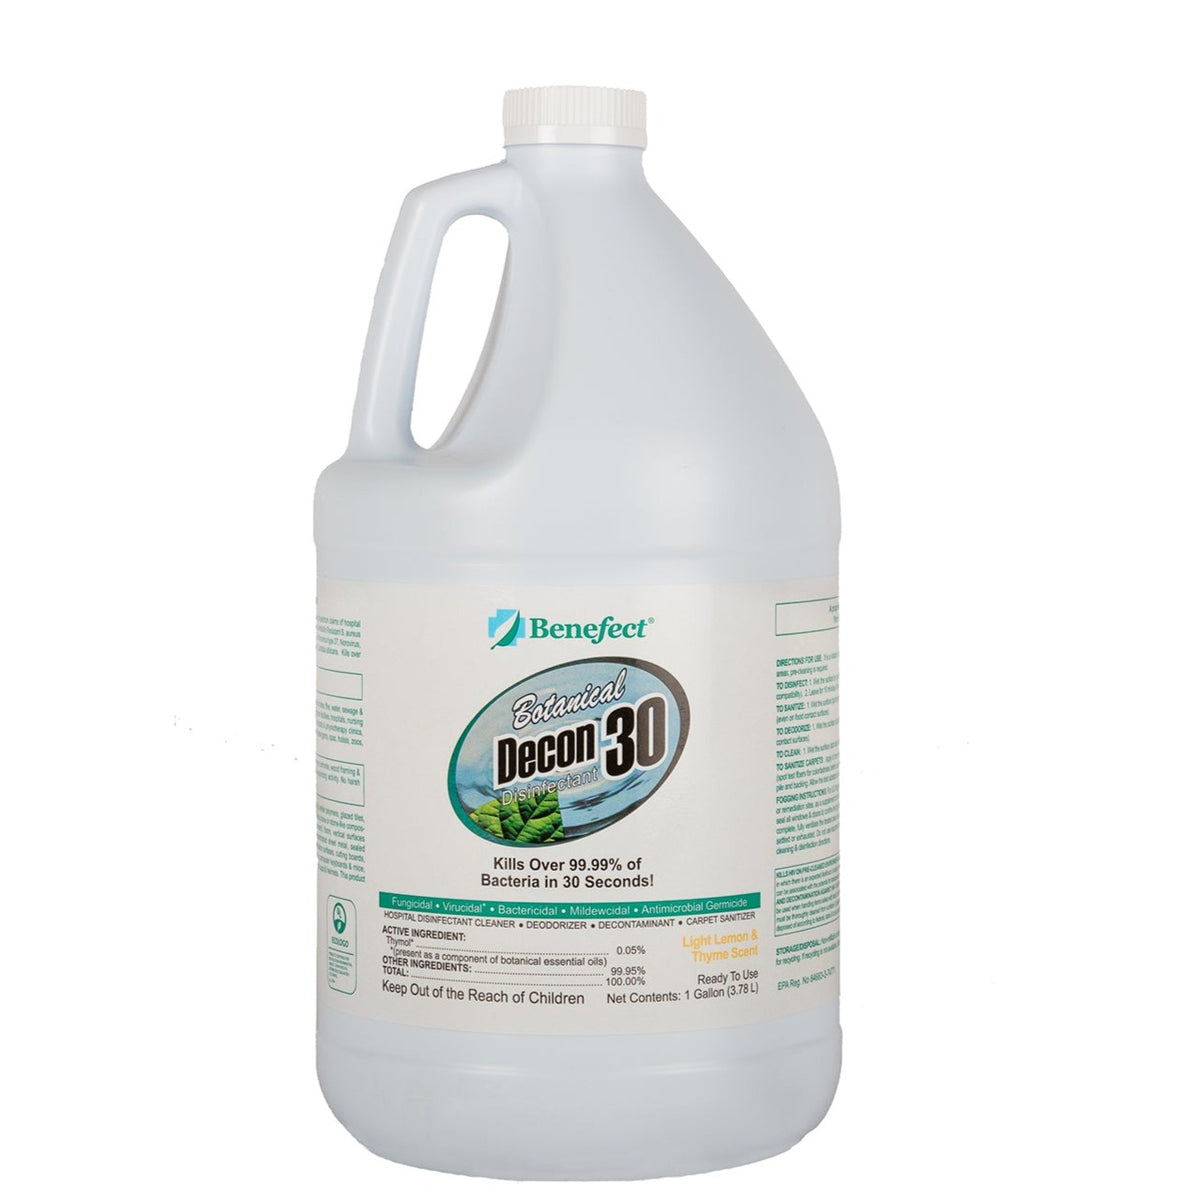 desinfectant-biocidebotanical-decon30-benefect